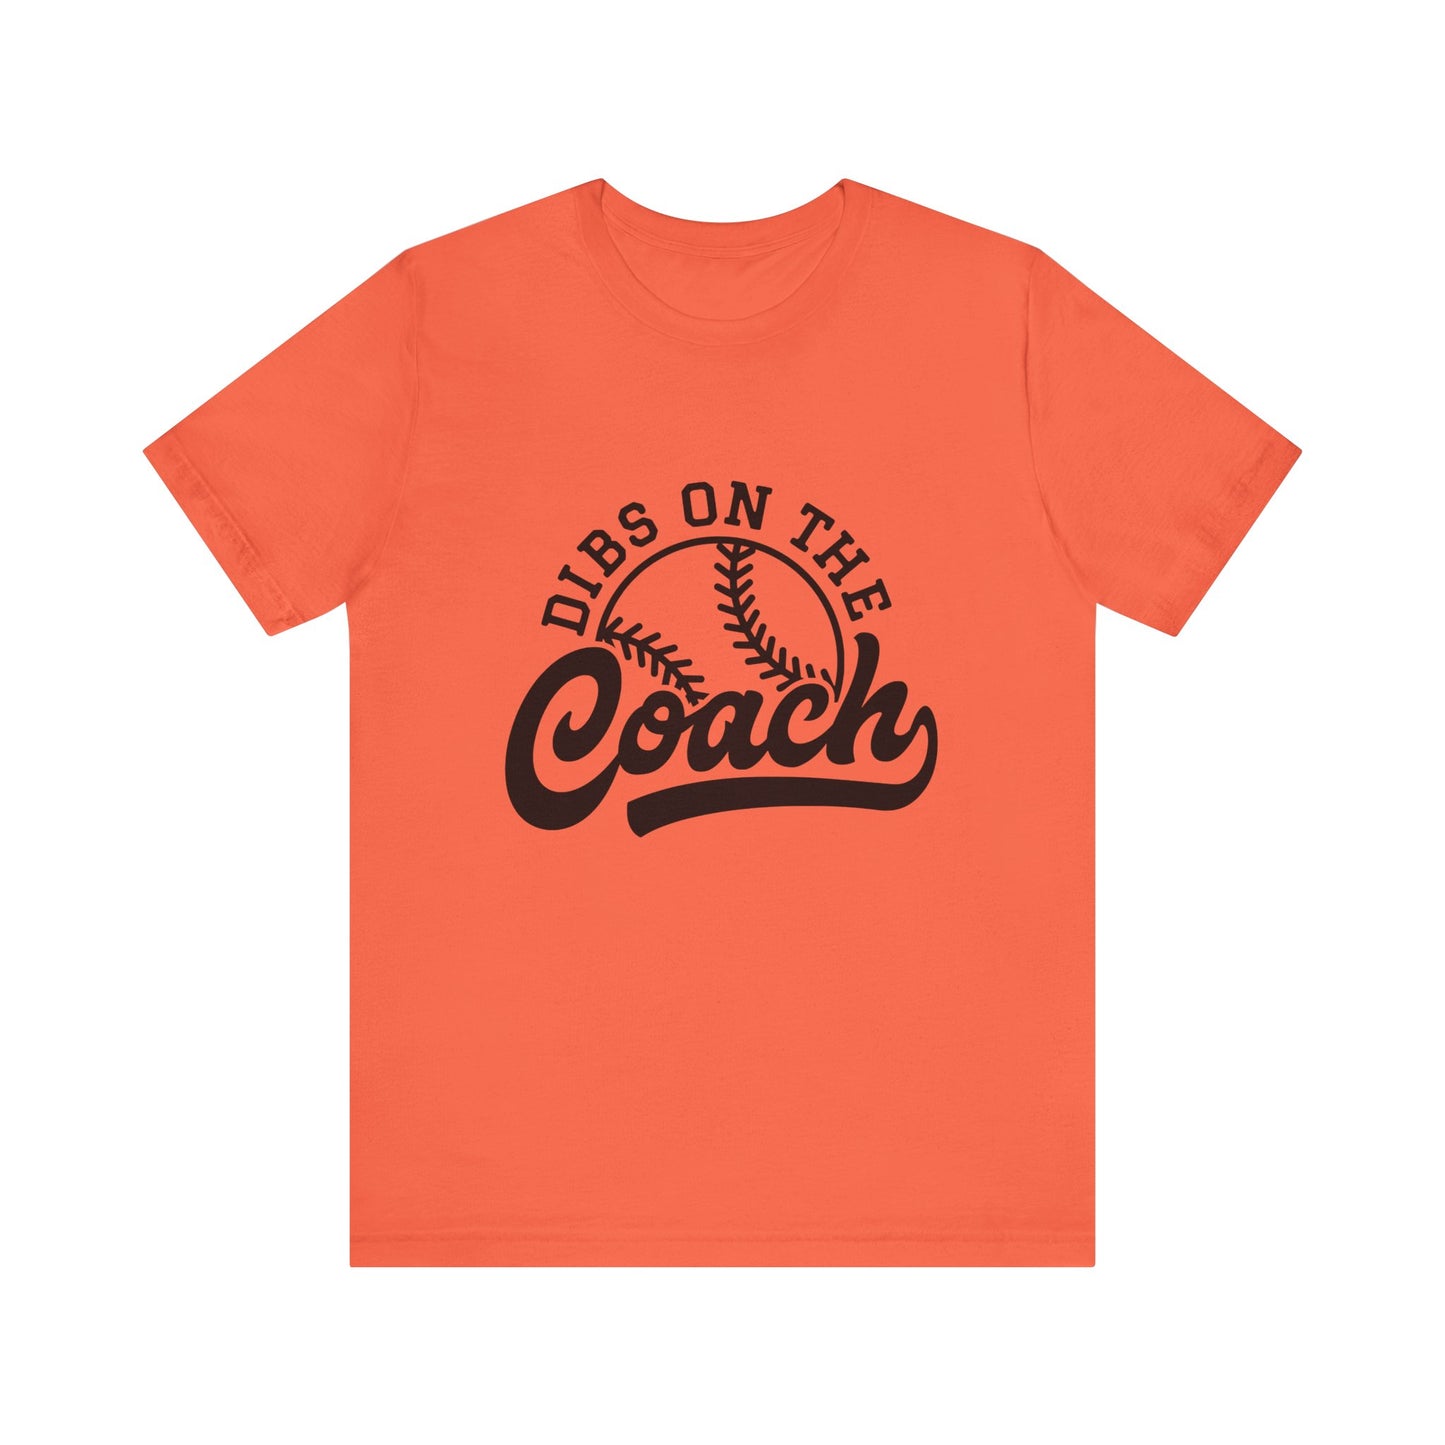 Dibs on the coach Women's Short Sleeve Shirt Baseball Softball Tball Coach